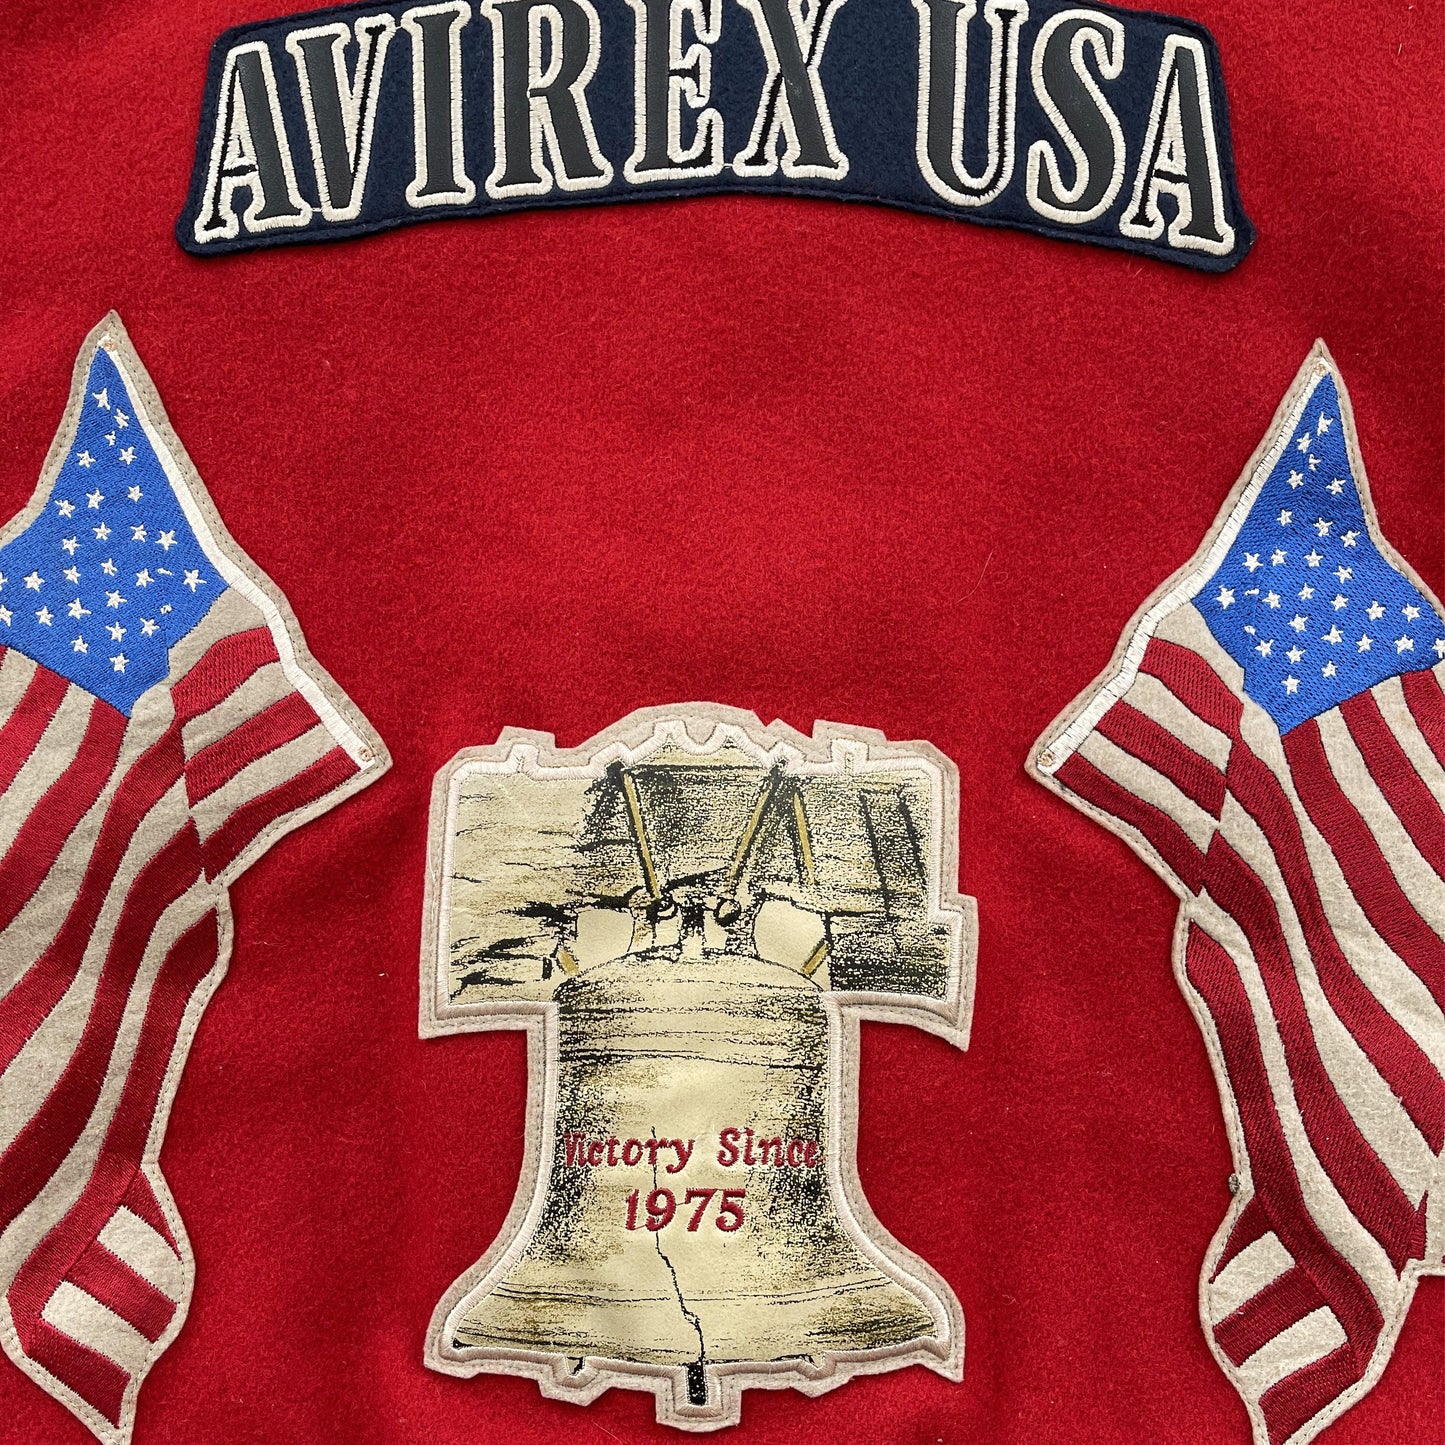 Avirex Varsity Jacket - Known Source